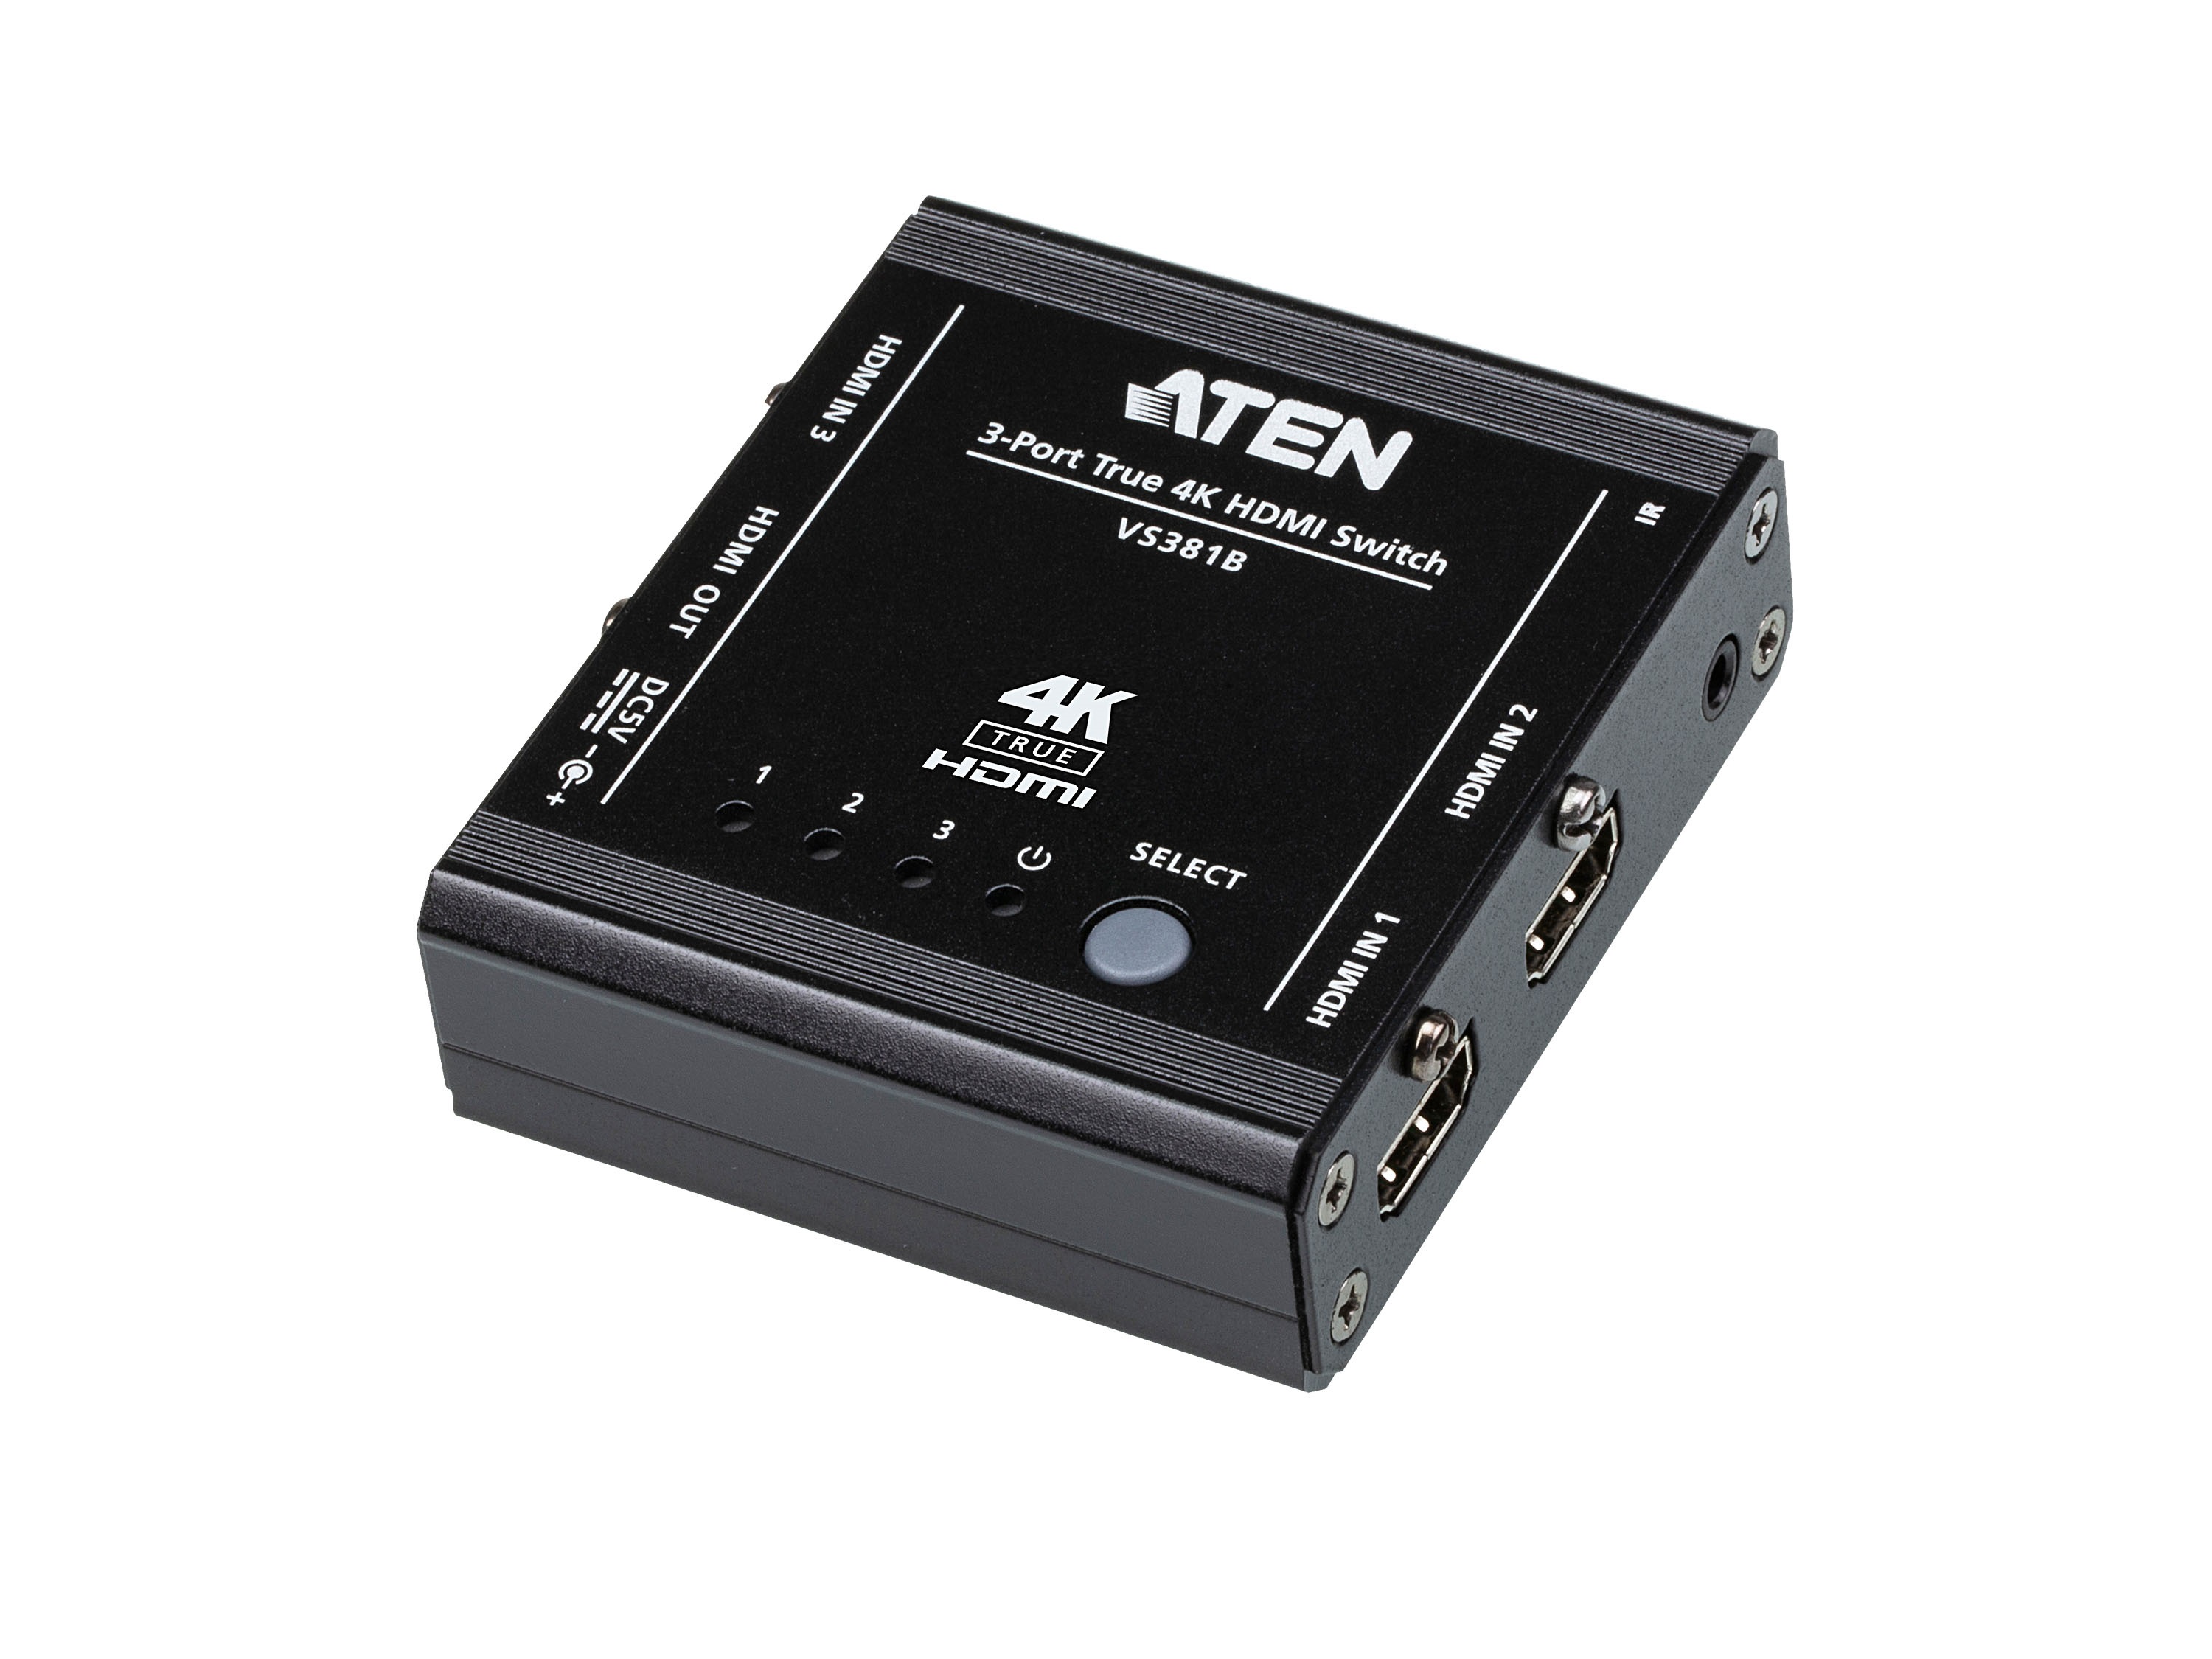 Aten VS381B 3-Port True 4K HDMI Switch